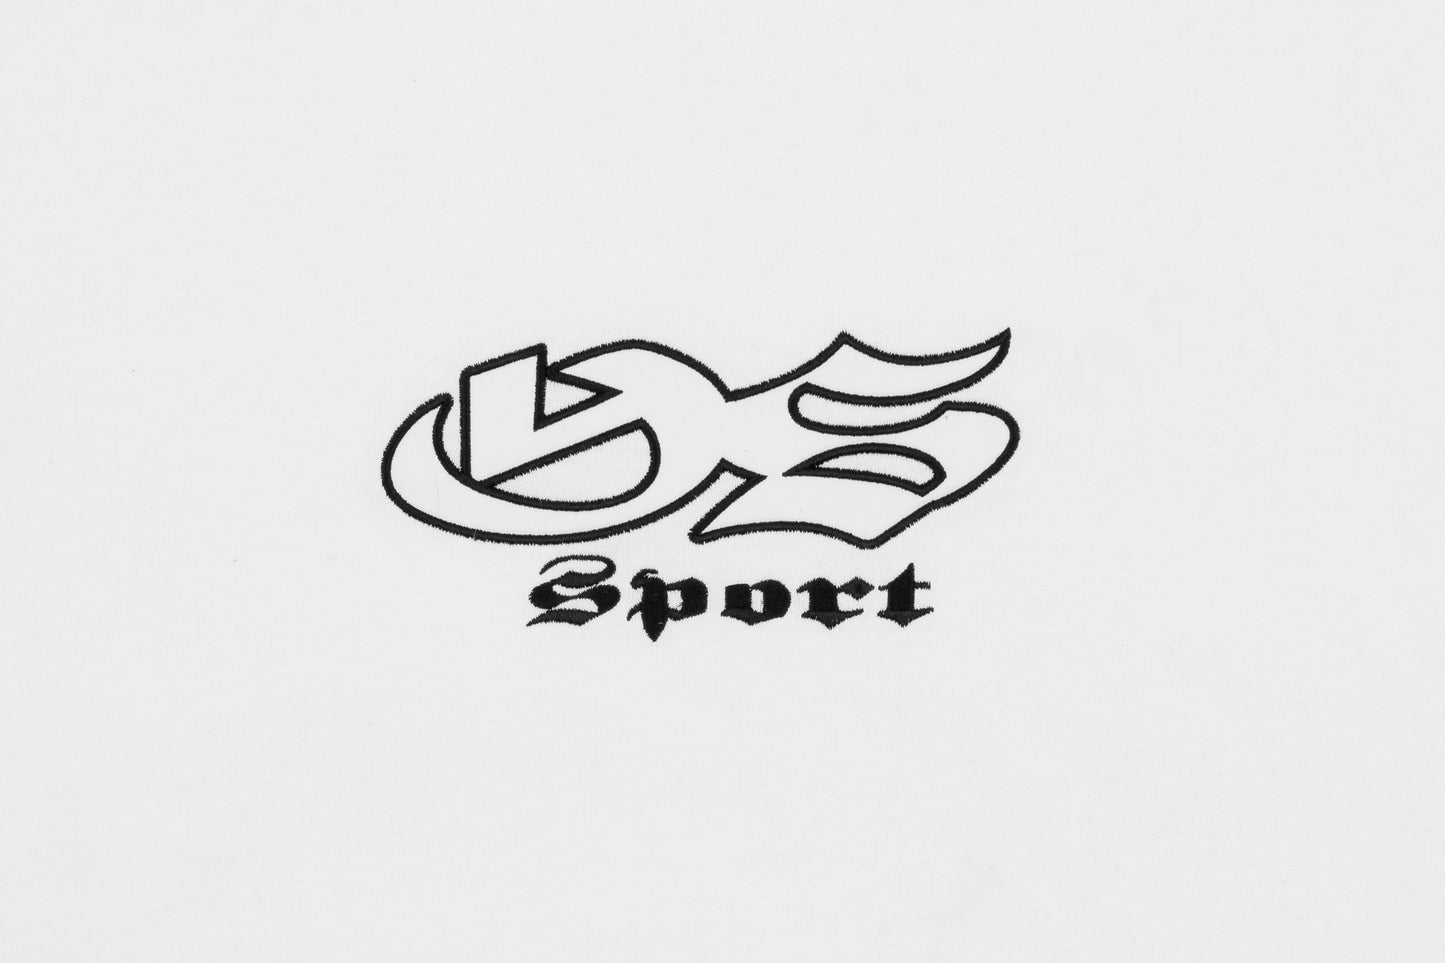 YS Sport T-Shirt (White)